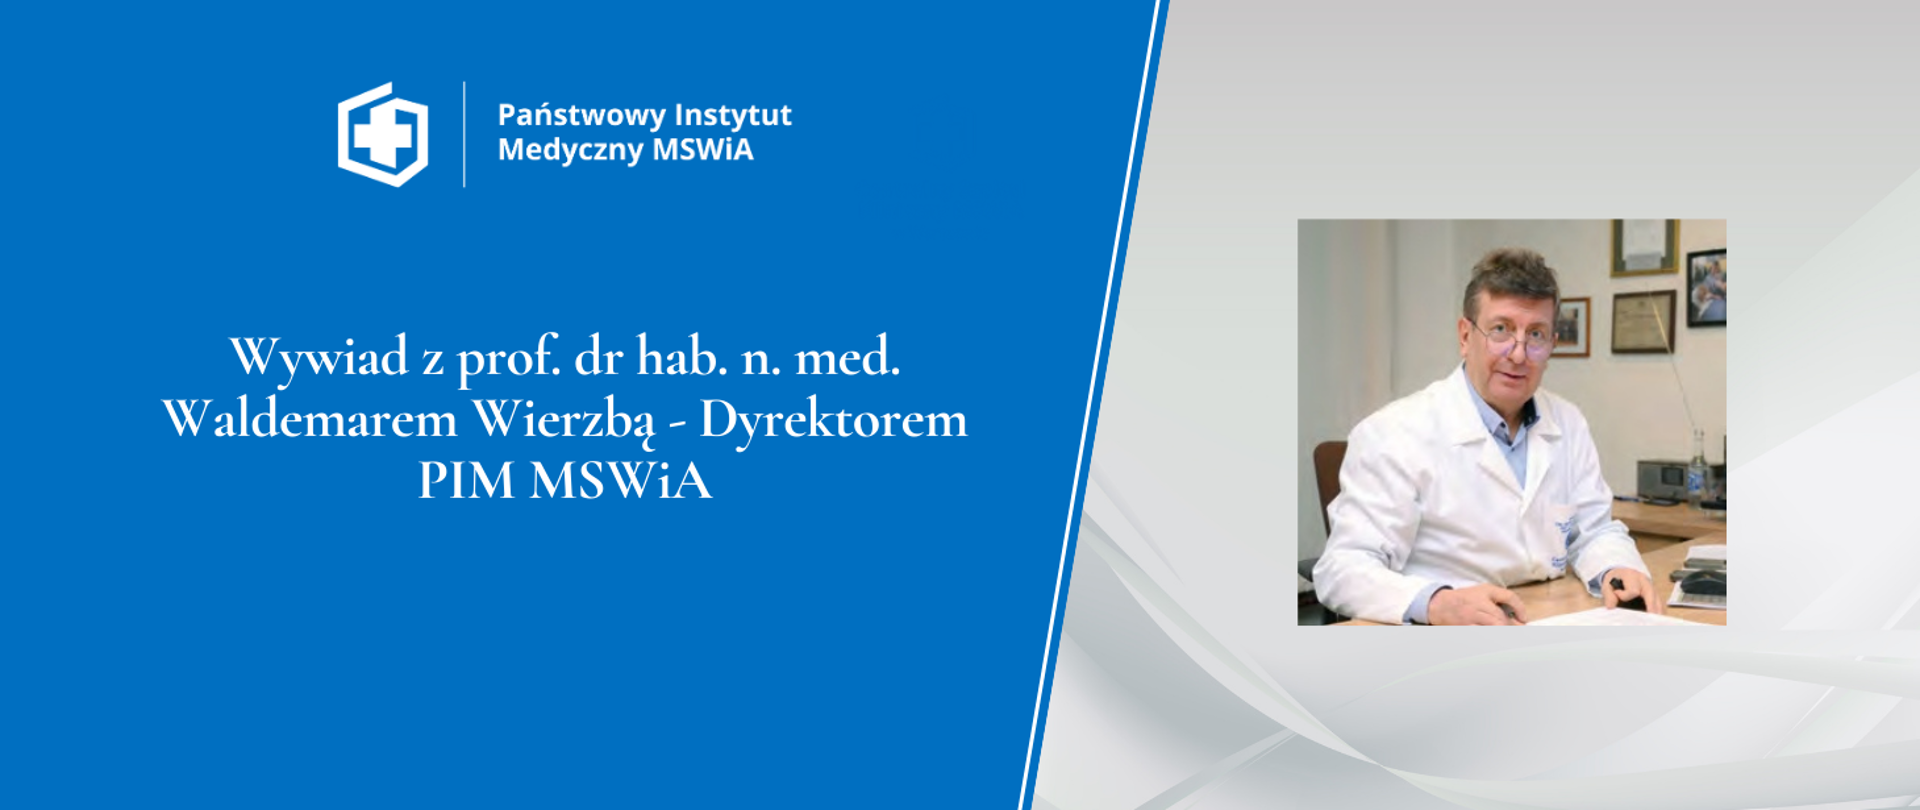 Wywiad z prof. dr hab. n. med. Waldemarem Wierzbą - Dyrektorem PIM MSWiA